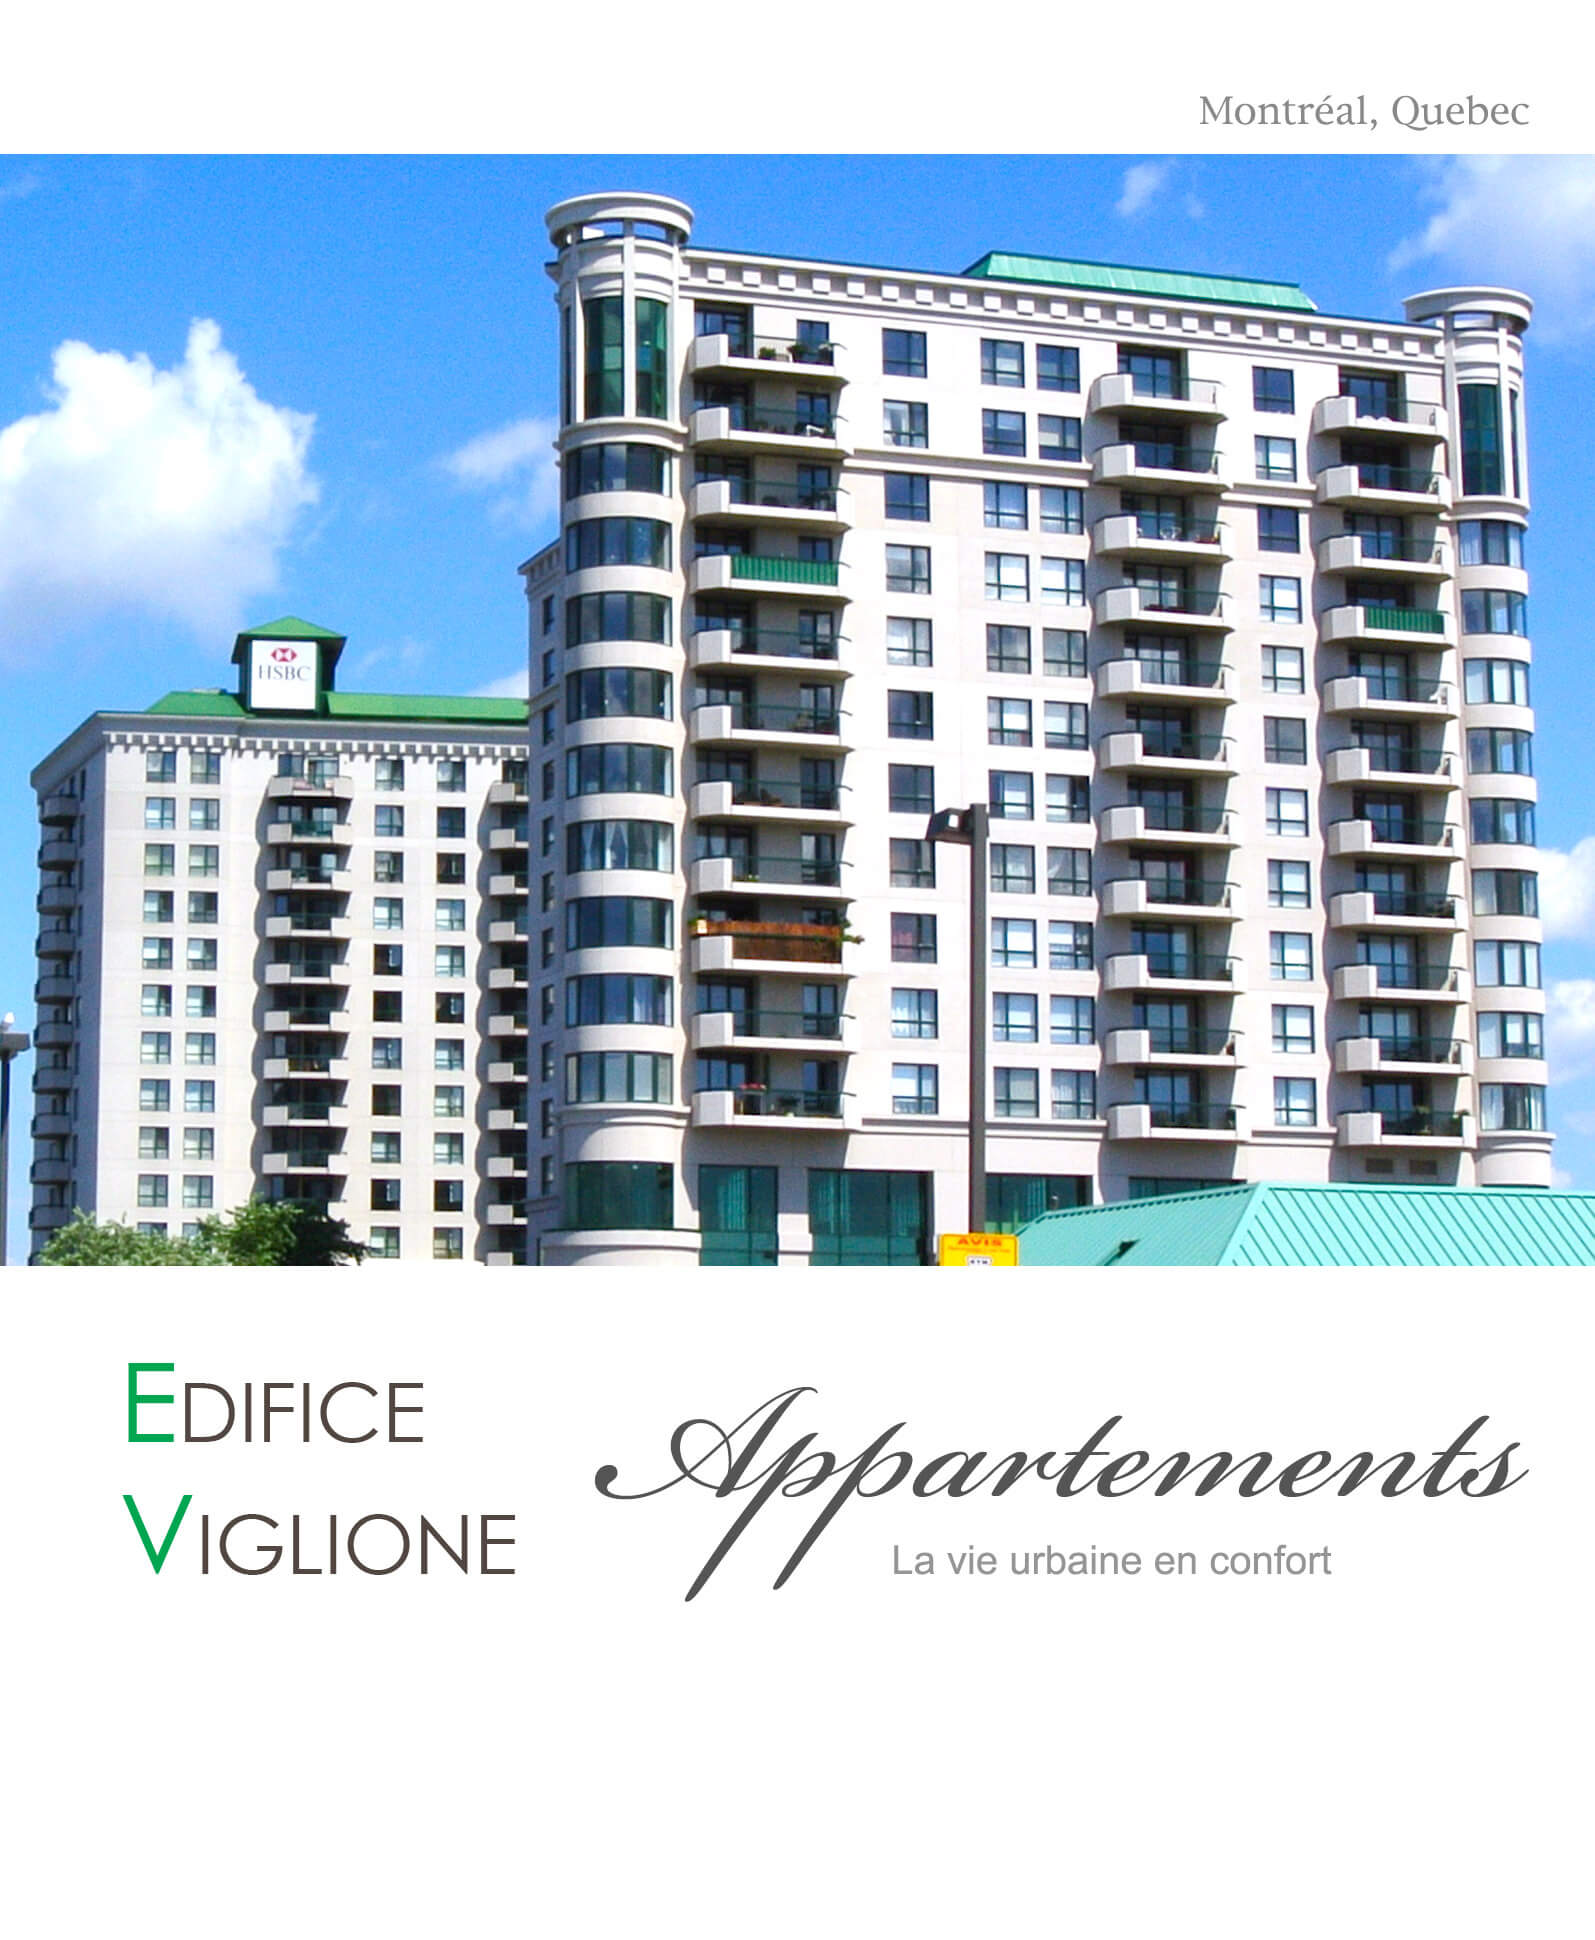 Appartements 3 ½, 4 ½, 5 ½ à louer - 514-295-0556 - Edifice Viglione II